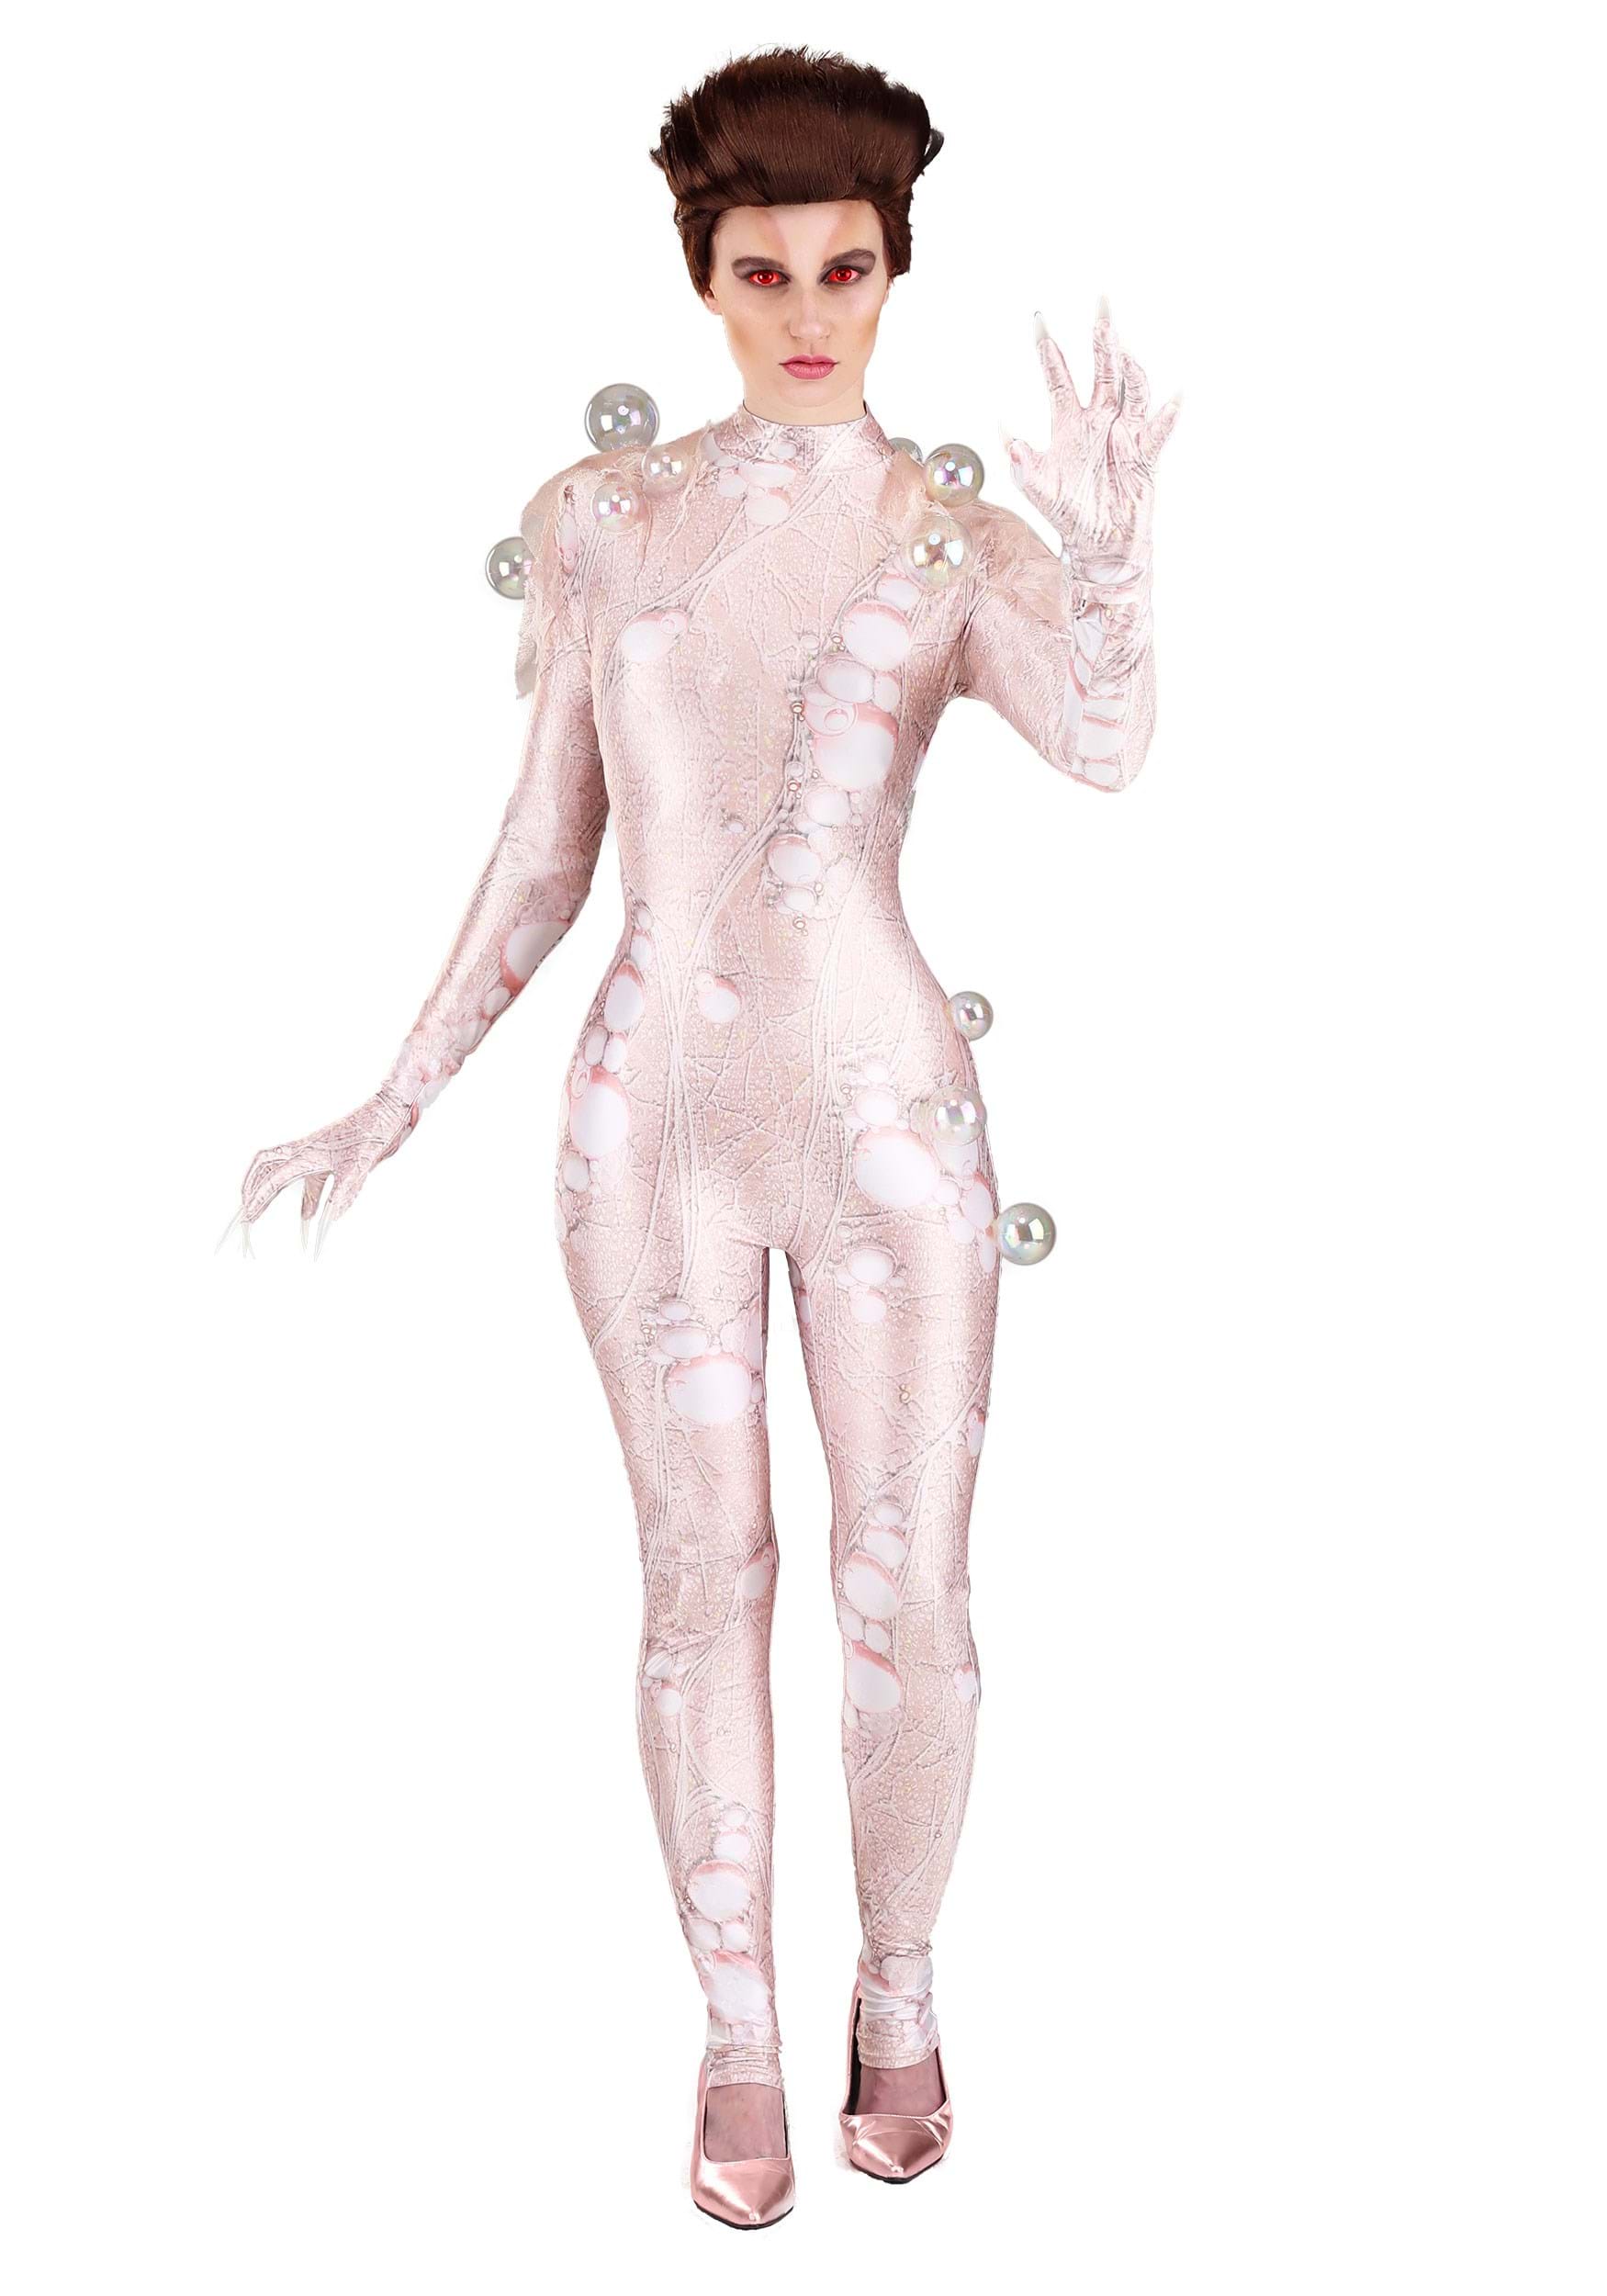 Photos - Fancy Dress Ghostbusters FUN Costumes  Gozer Women's Costume Pink/Beige FUN1468AD 